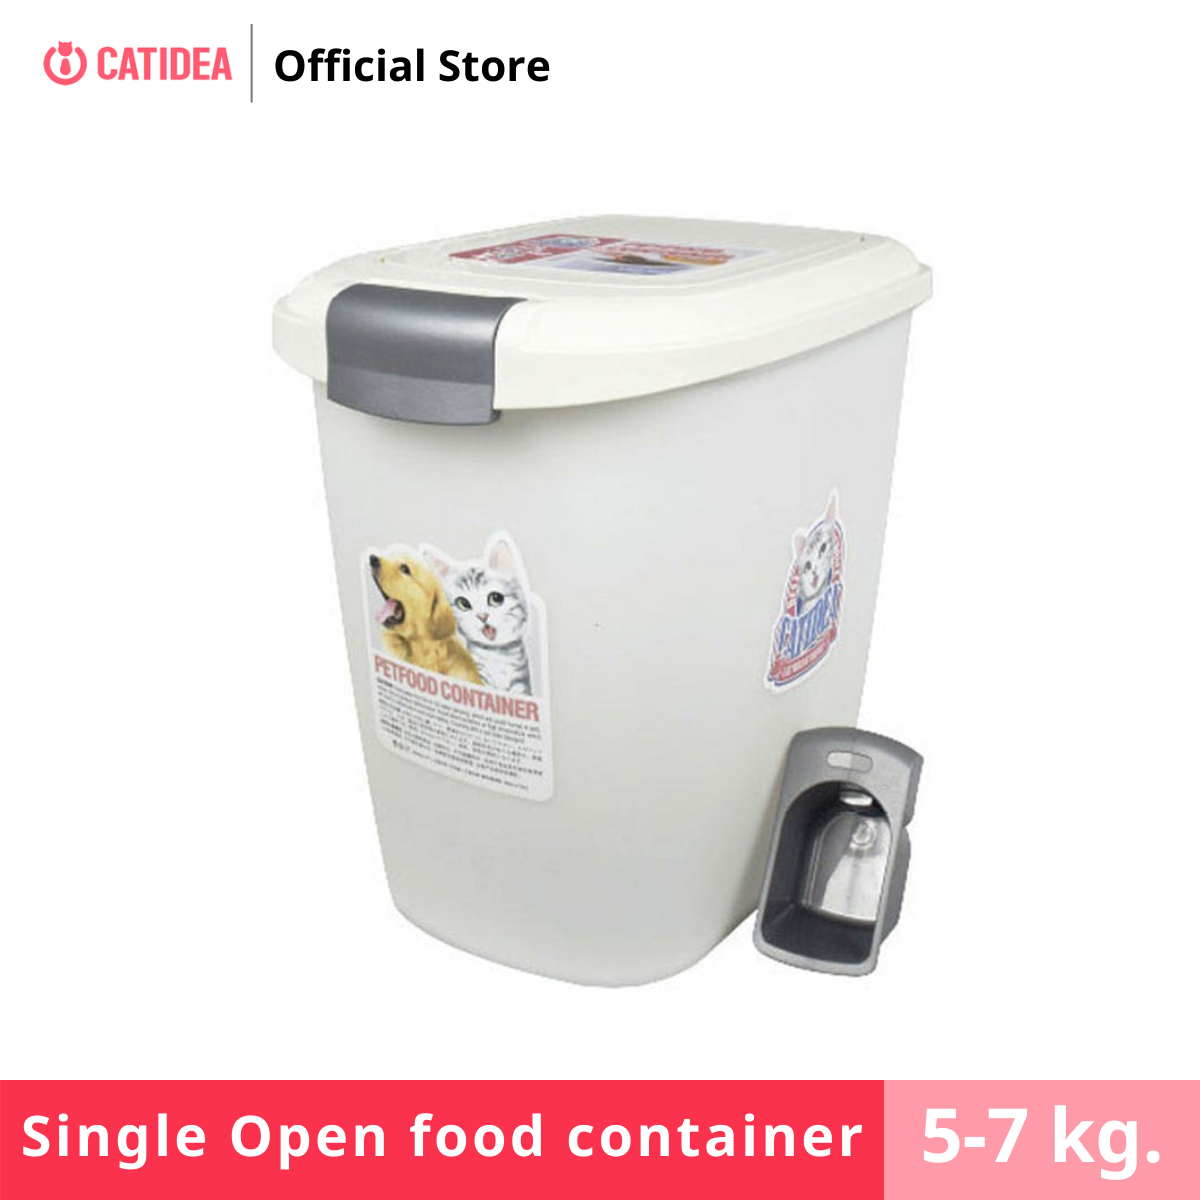 Catidea Single Open food container 5-7 kg. ถังเก็บอาหารสัตว์เลี้ยง พร้อมช้อนตัก ขนาด 5-7 กิโลกรัม